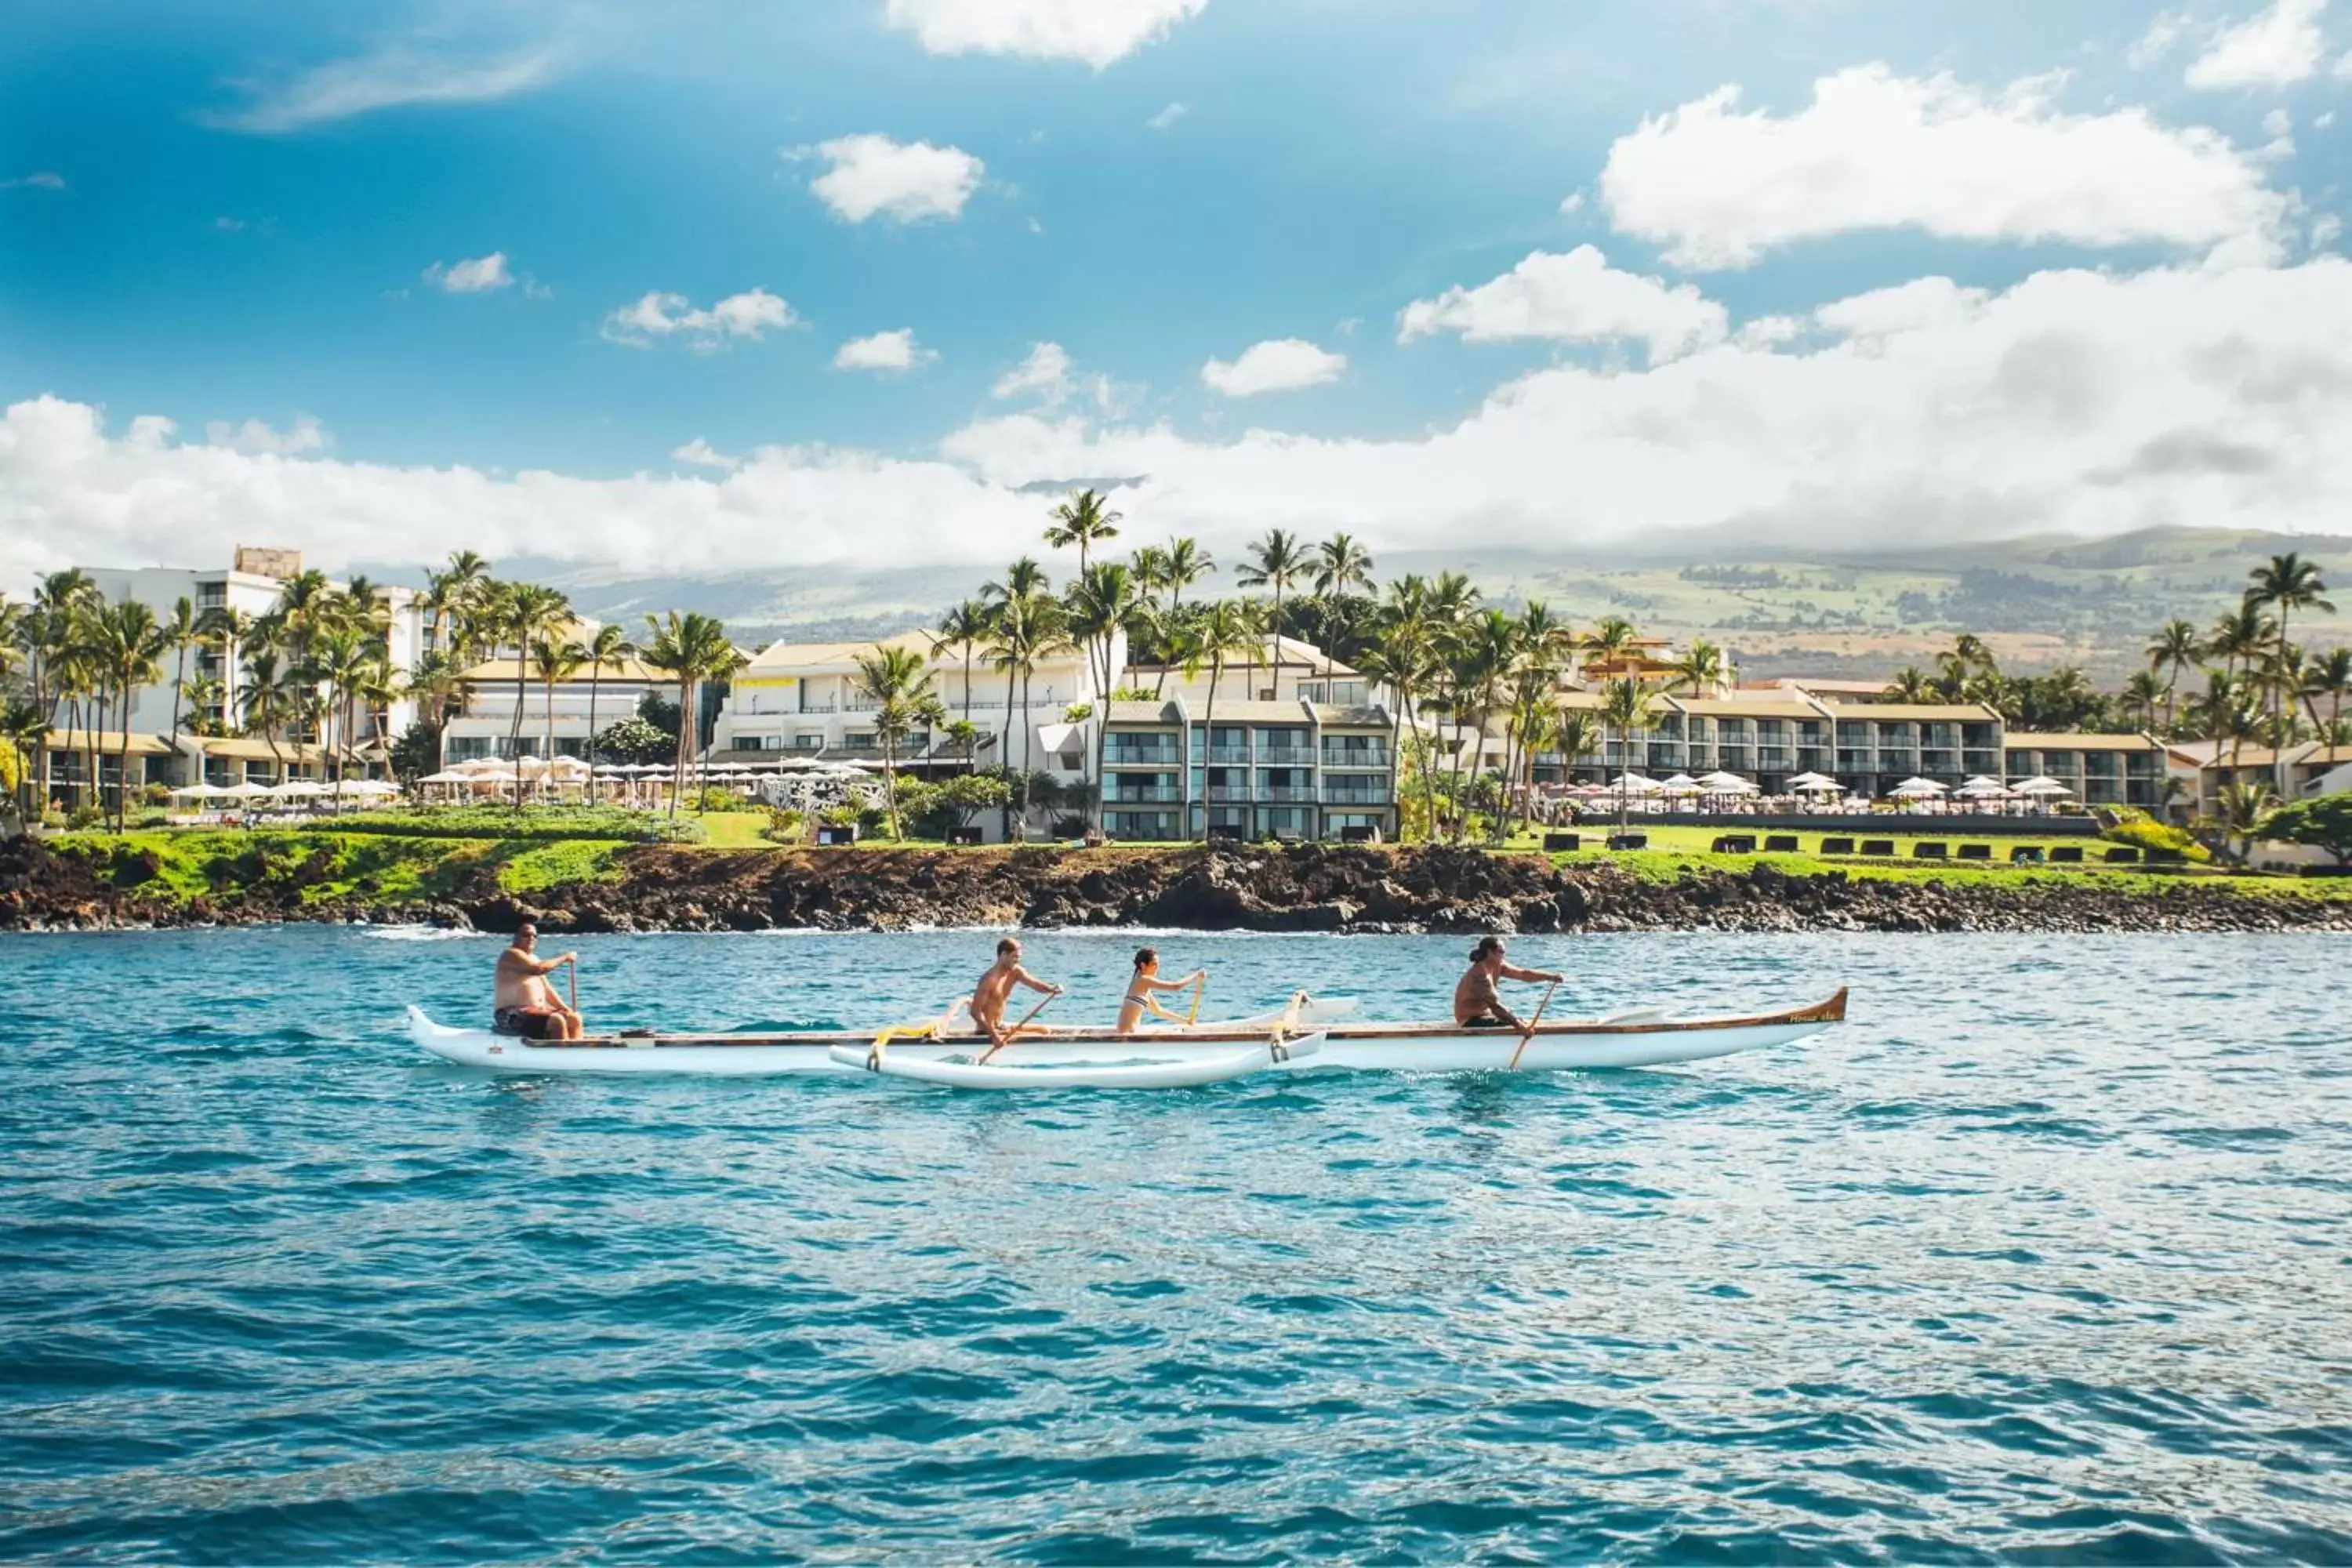 Fitness centre/facilities in Wailea Beach Resort - Marriott, Maui